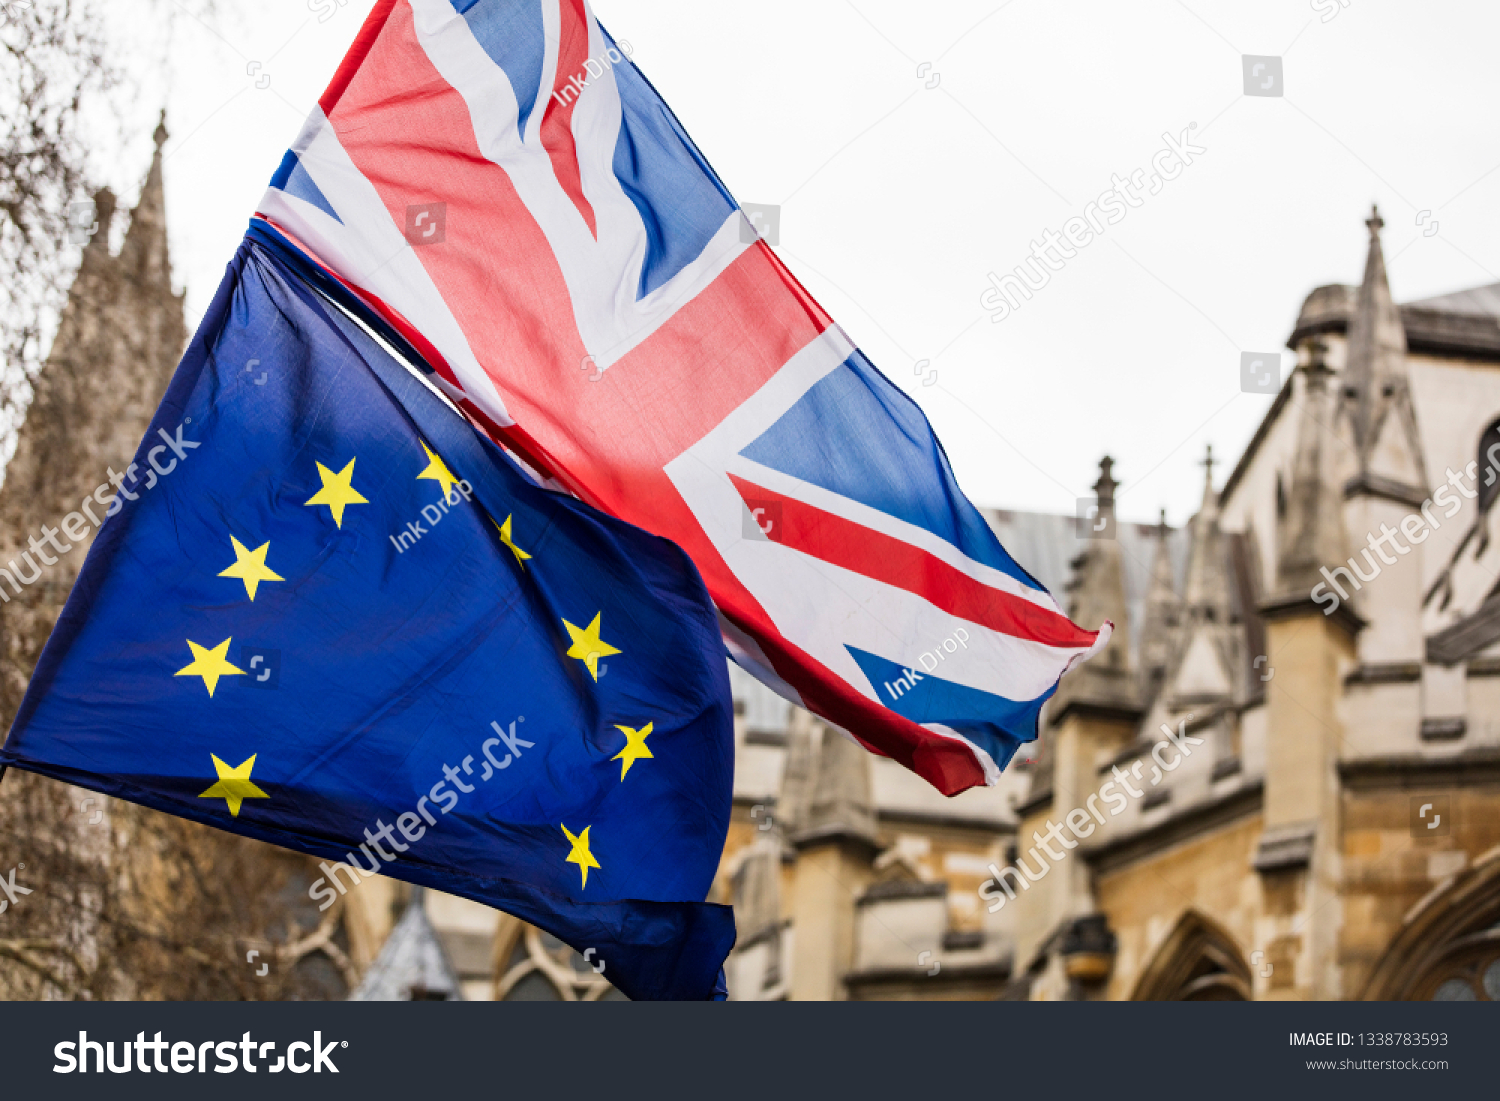 European Union and British Union Jack flag flying together.  #1338783593